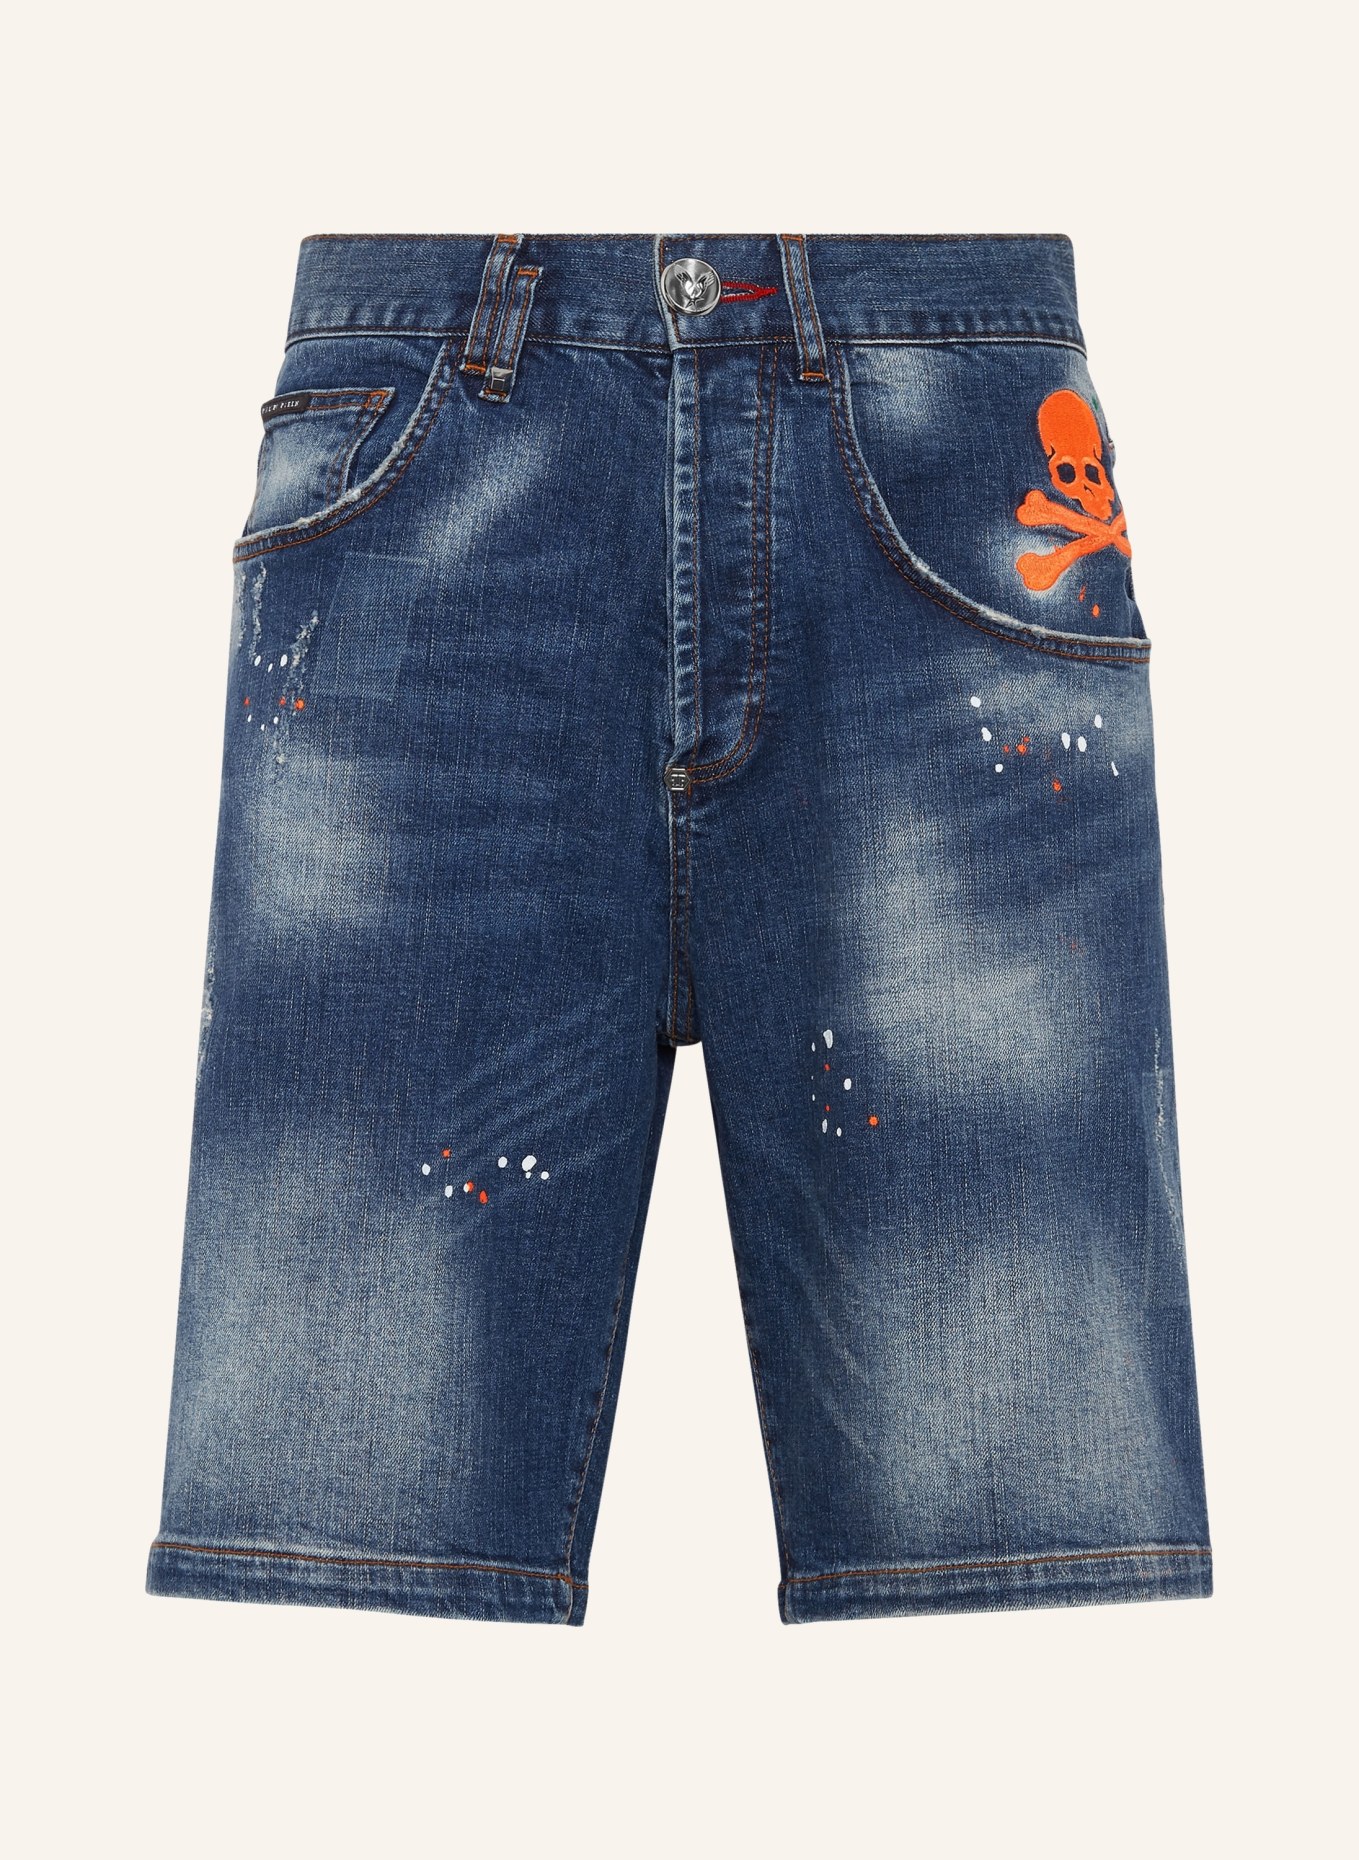 PHILIPP PLEIN Jeans-Shorts SKULL & BONES Formentera Fit, Farbe: BLAU (Bild 1)